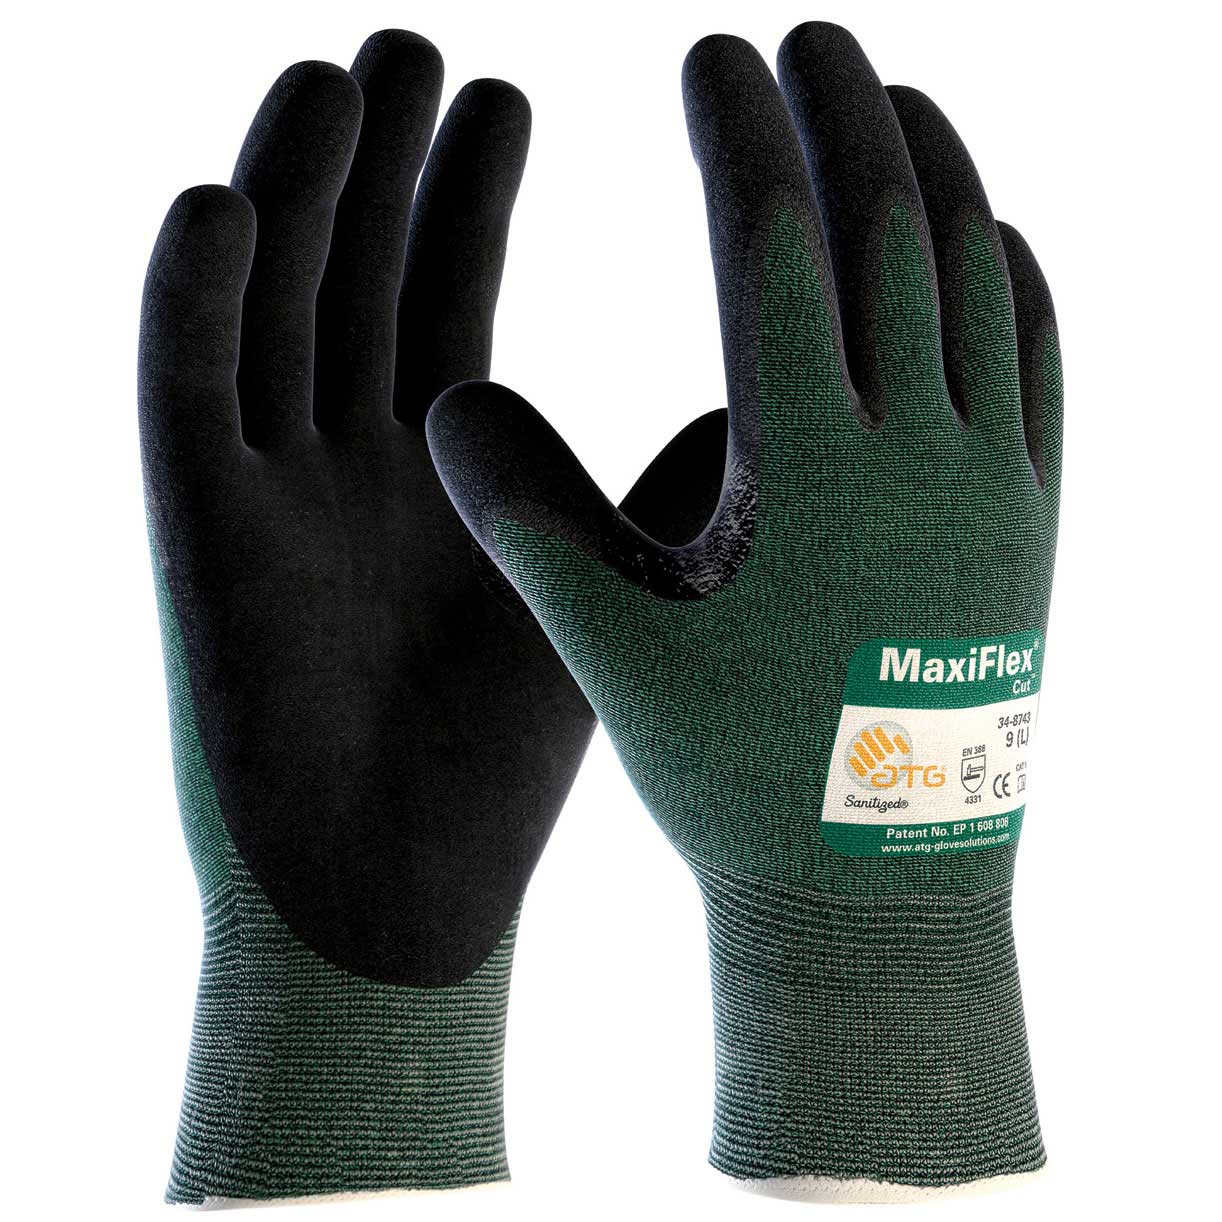 PIP MaxiFlex Cut Seamless Knit Engineered Yarn Glove